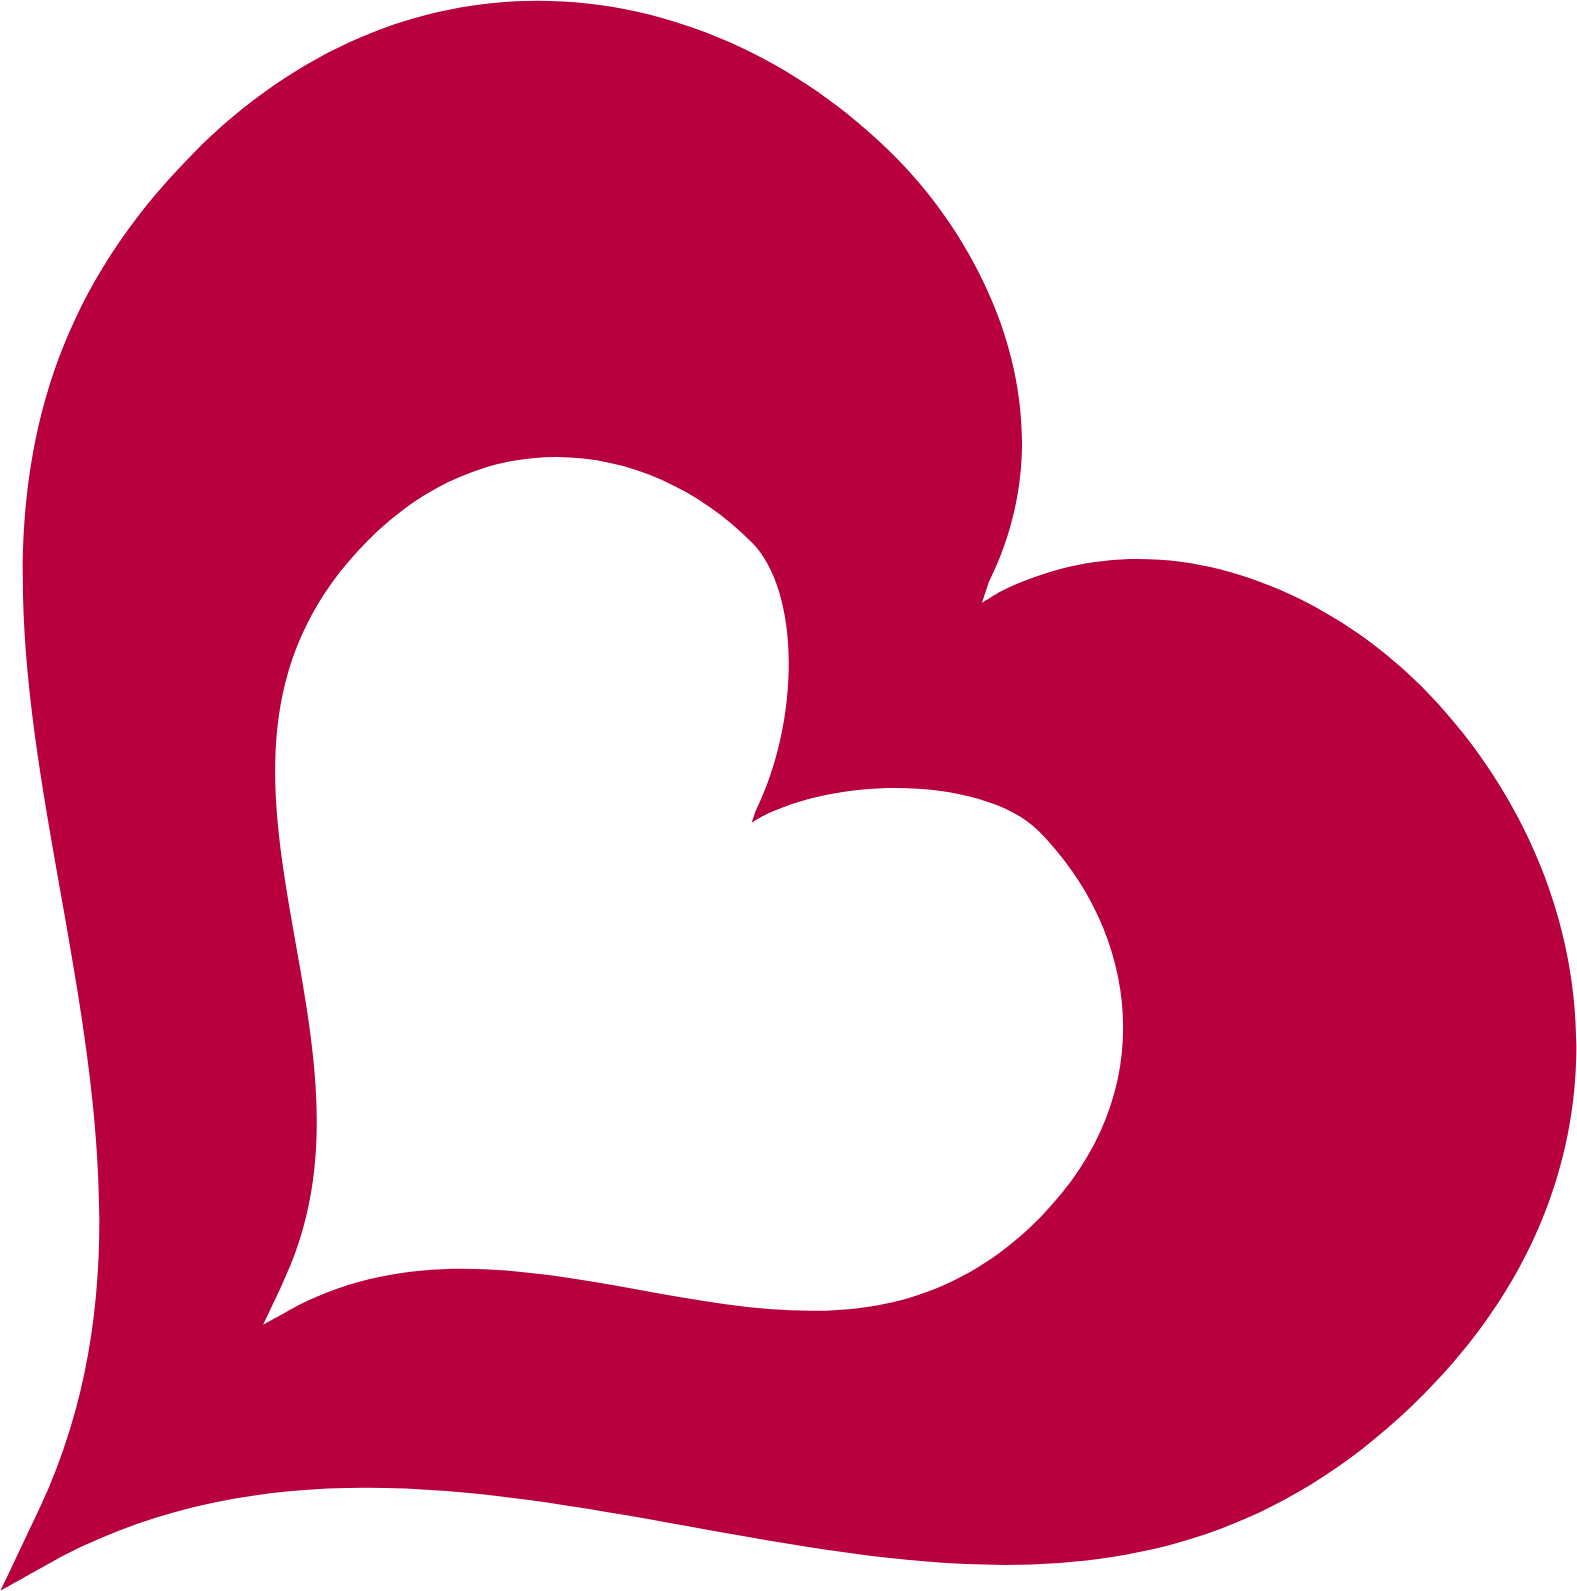 Burlington Stores logo (PNG transparent)